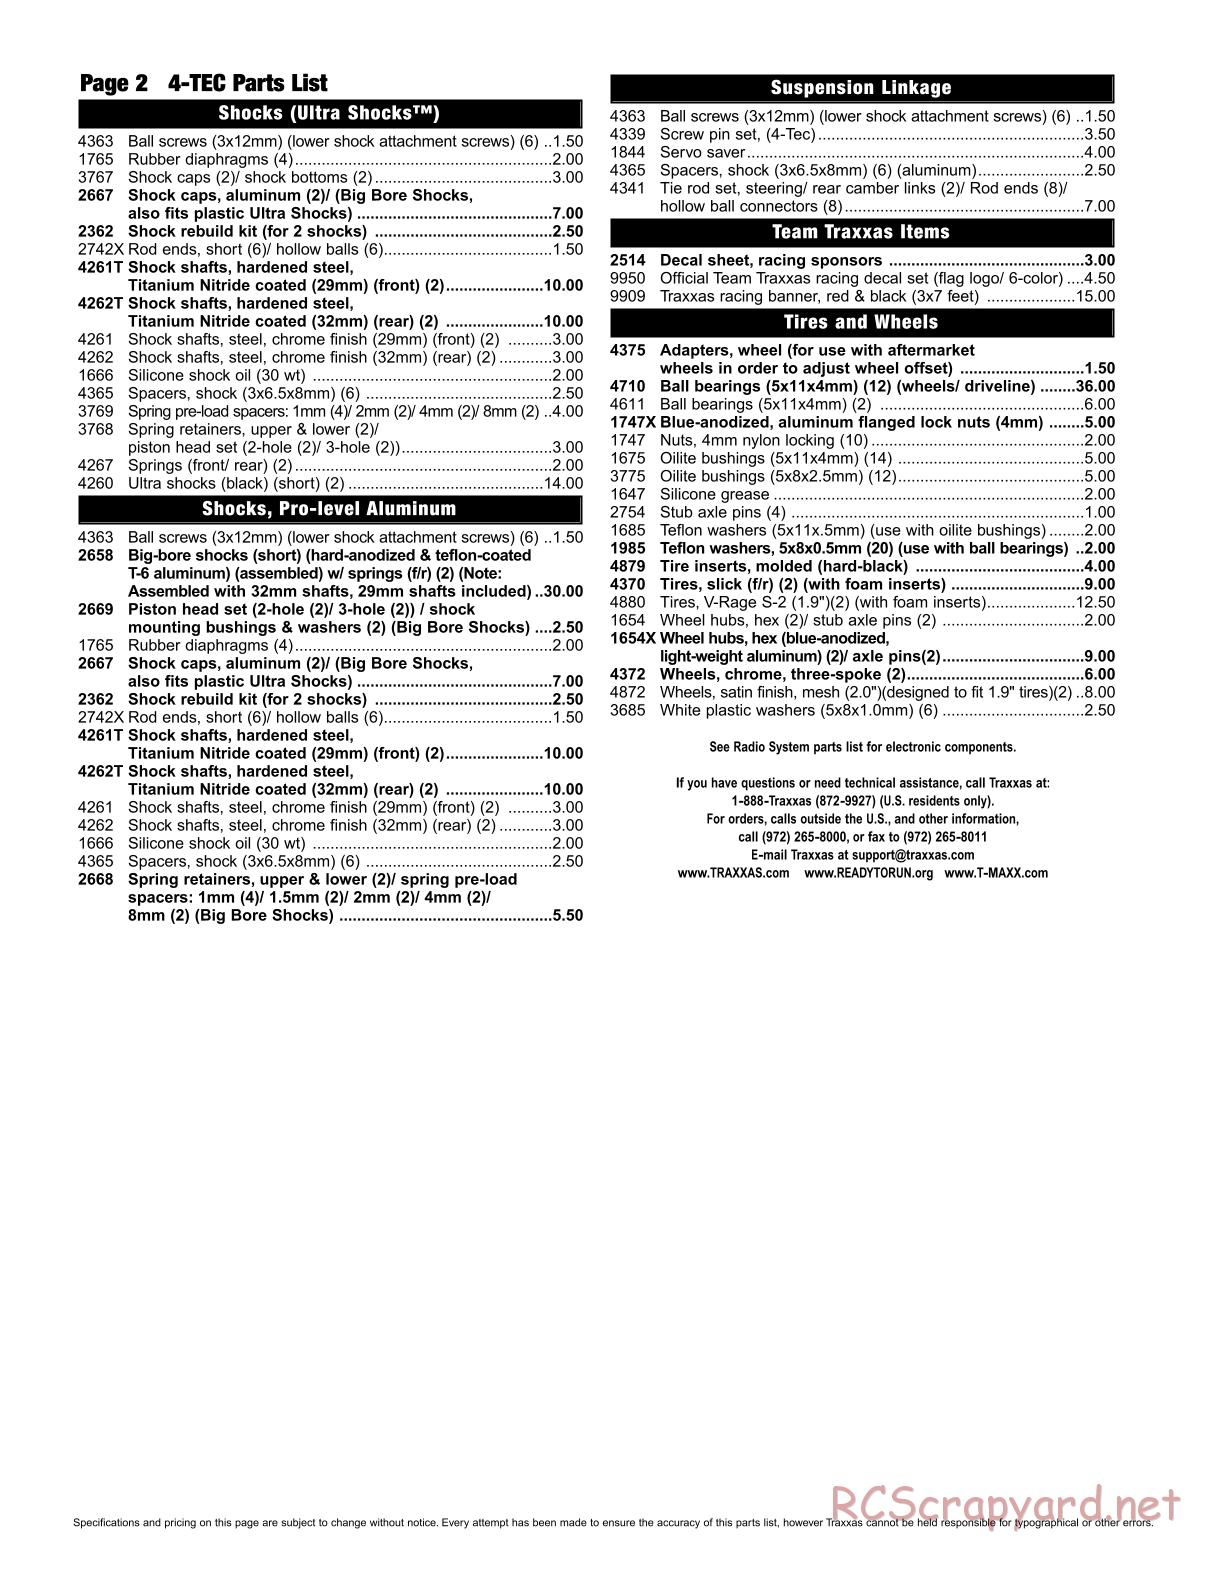 Traxxas - 4-Tec - Parts List - Page 2